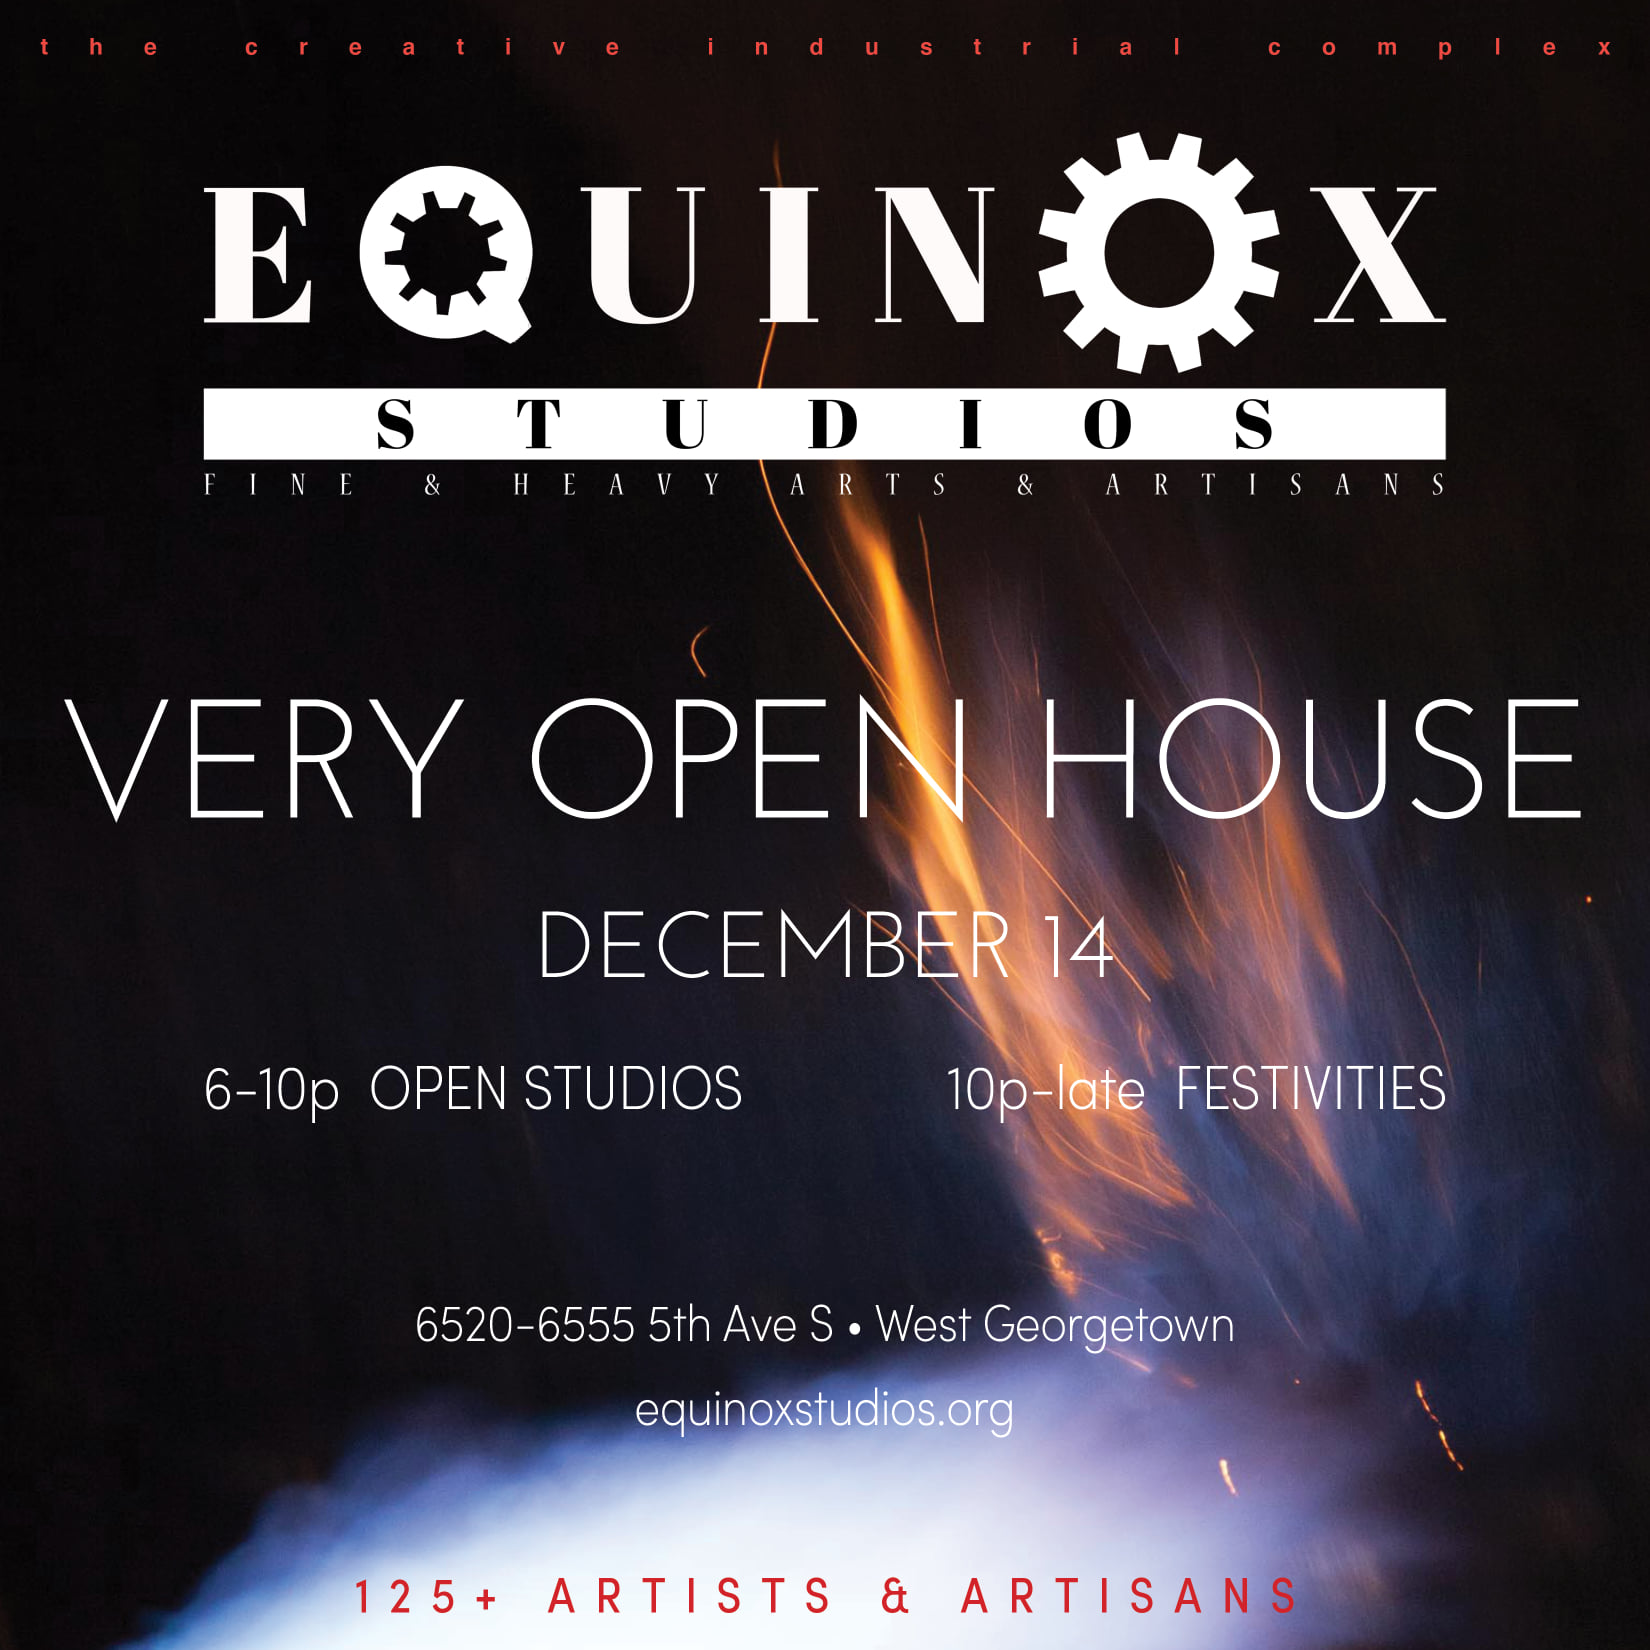 Equinox Studios